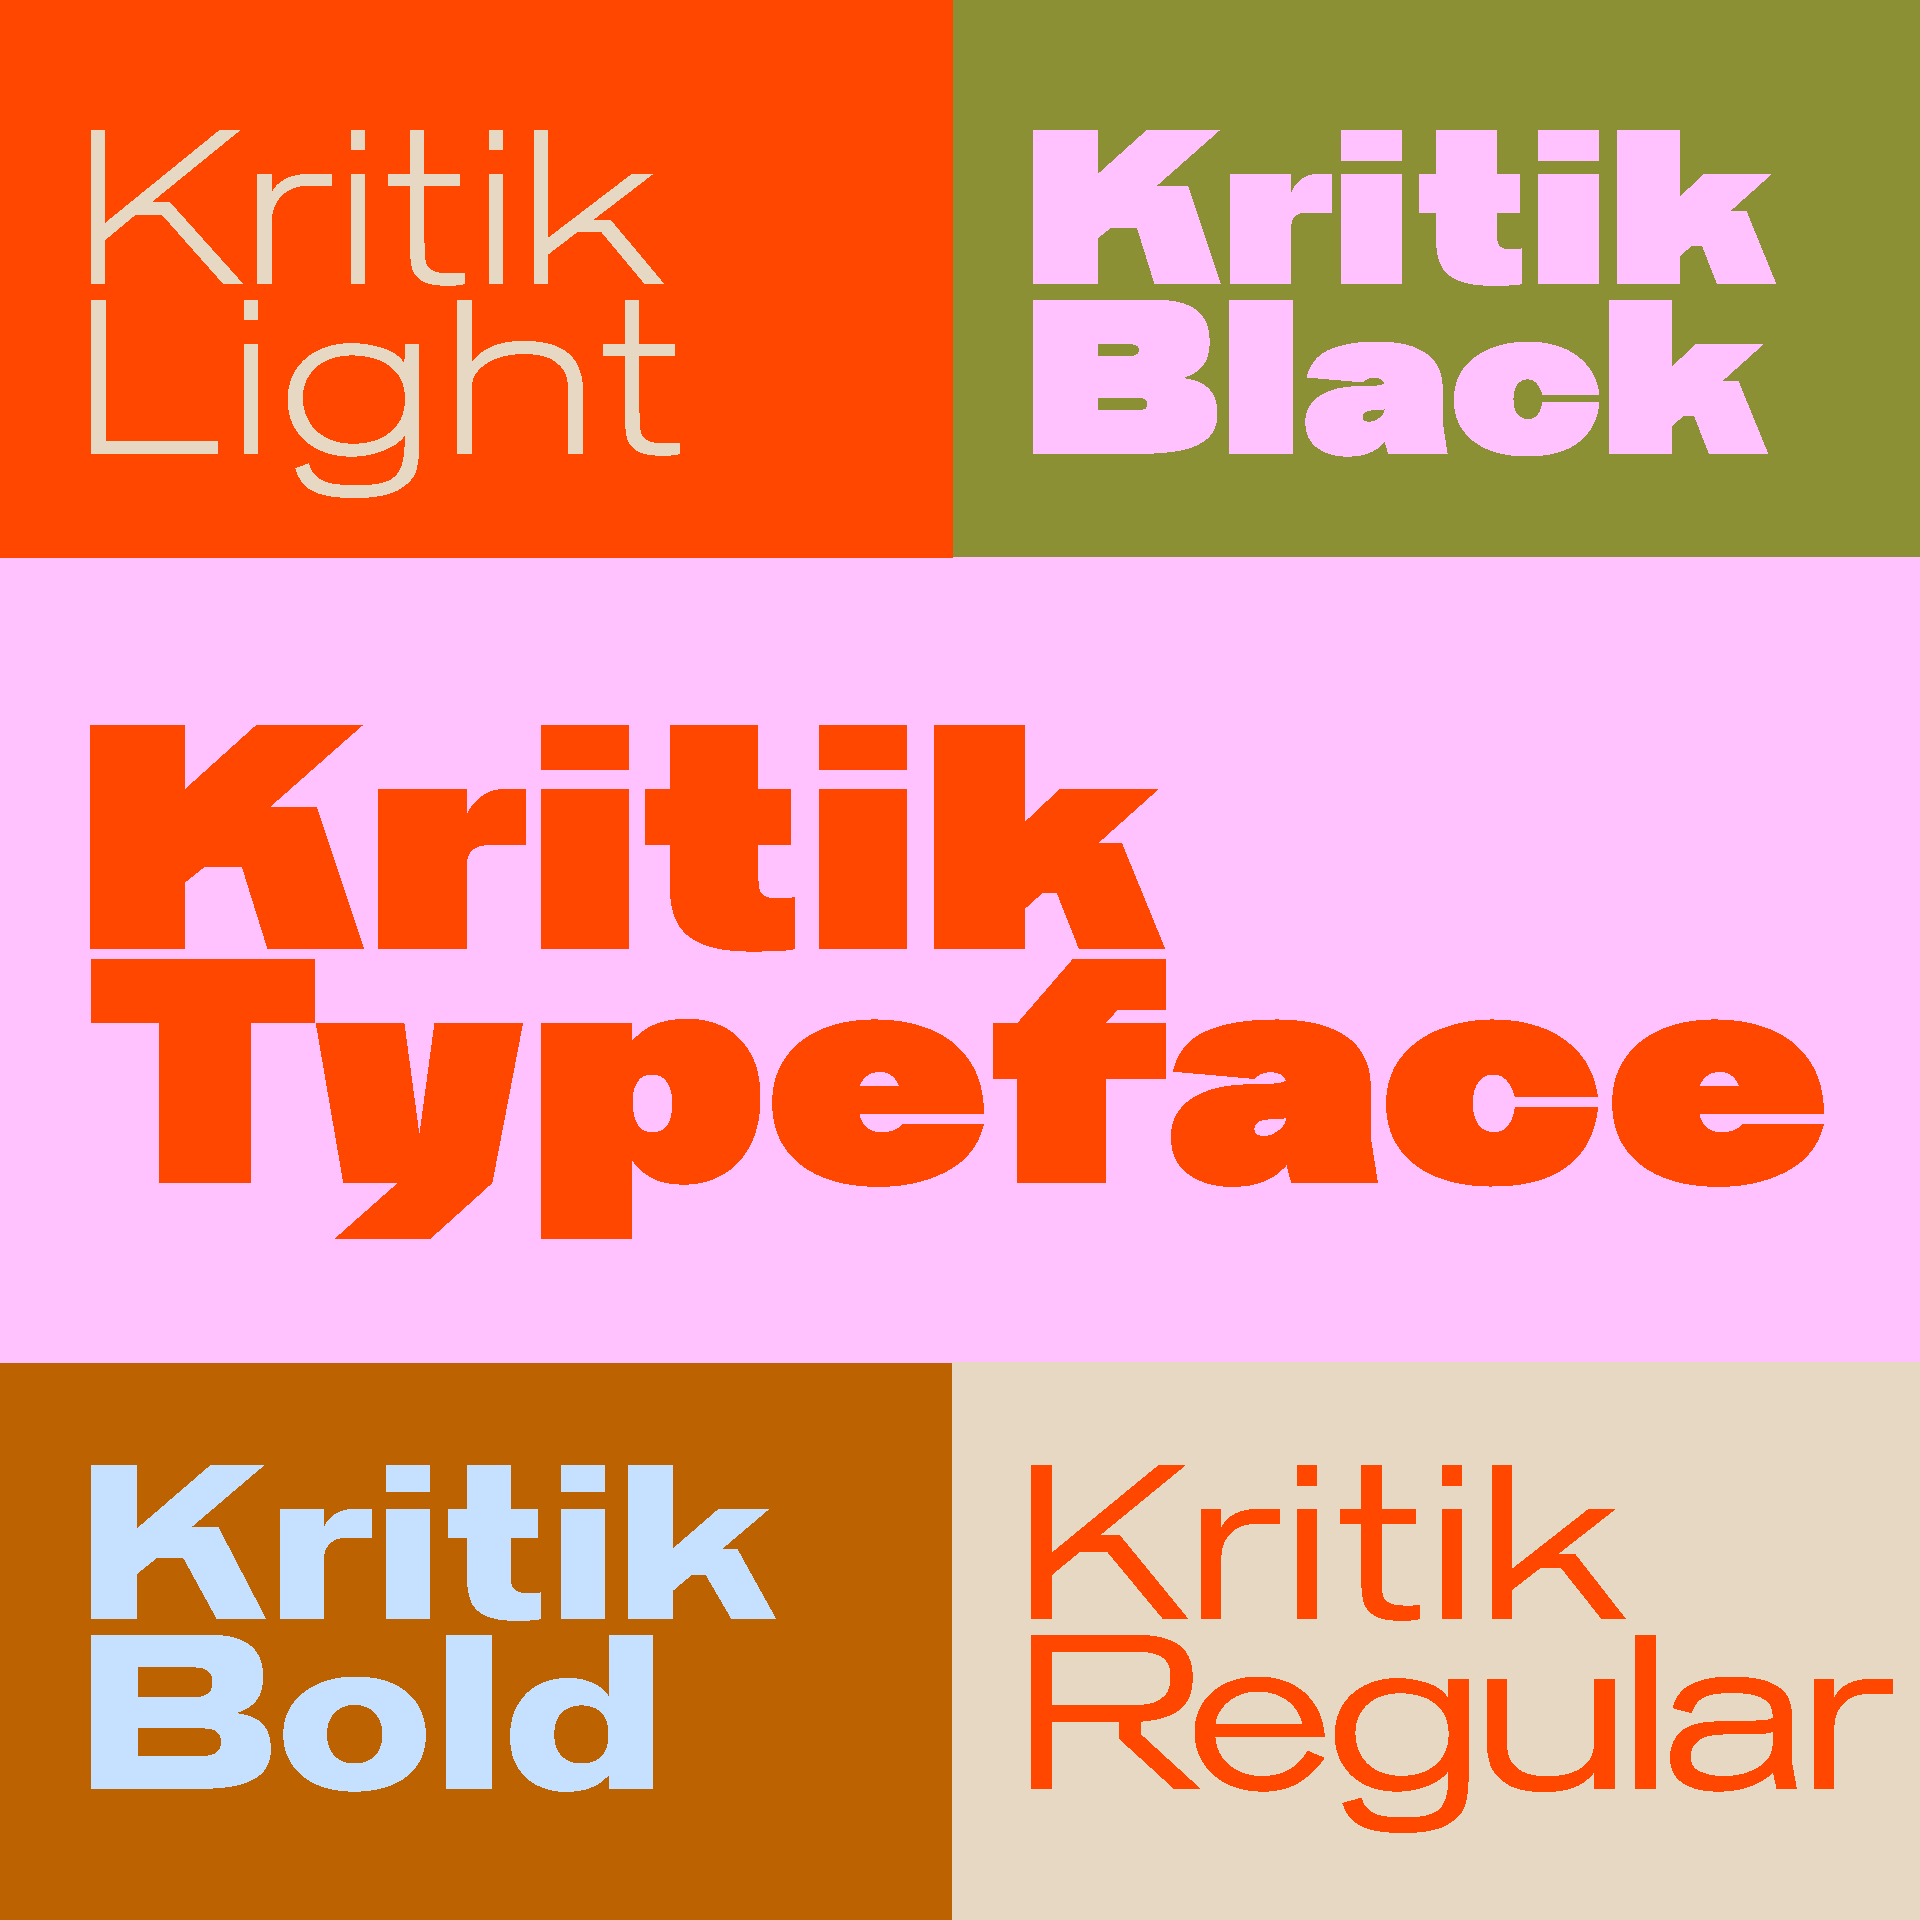 Kritik Typeface Overview